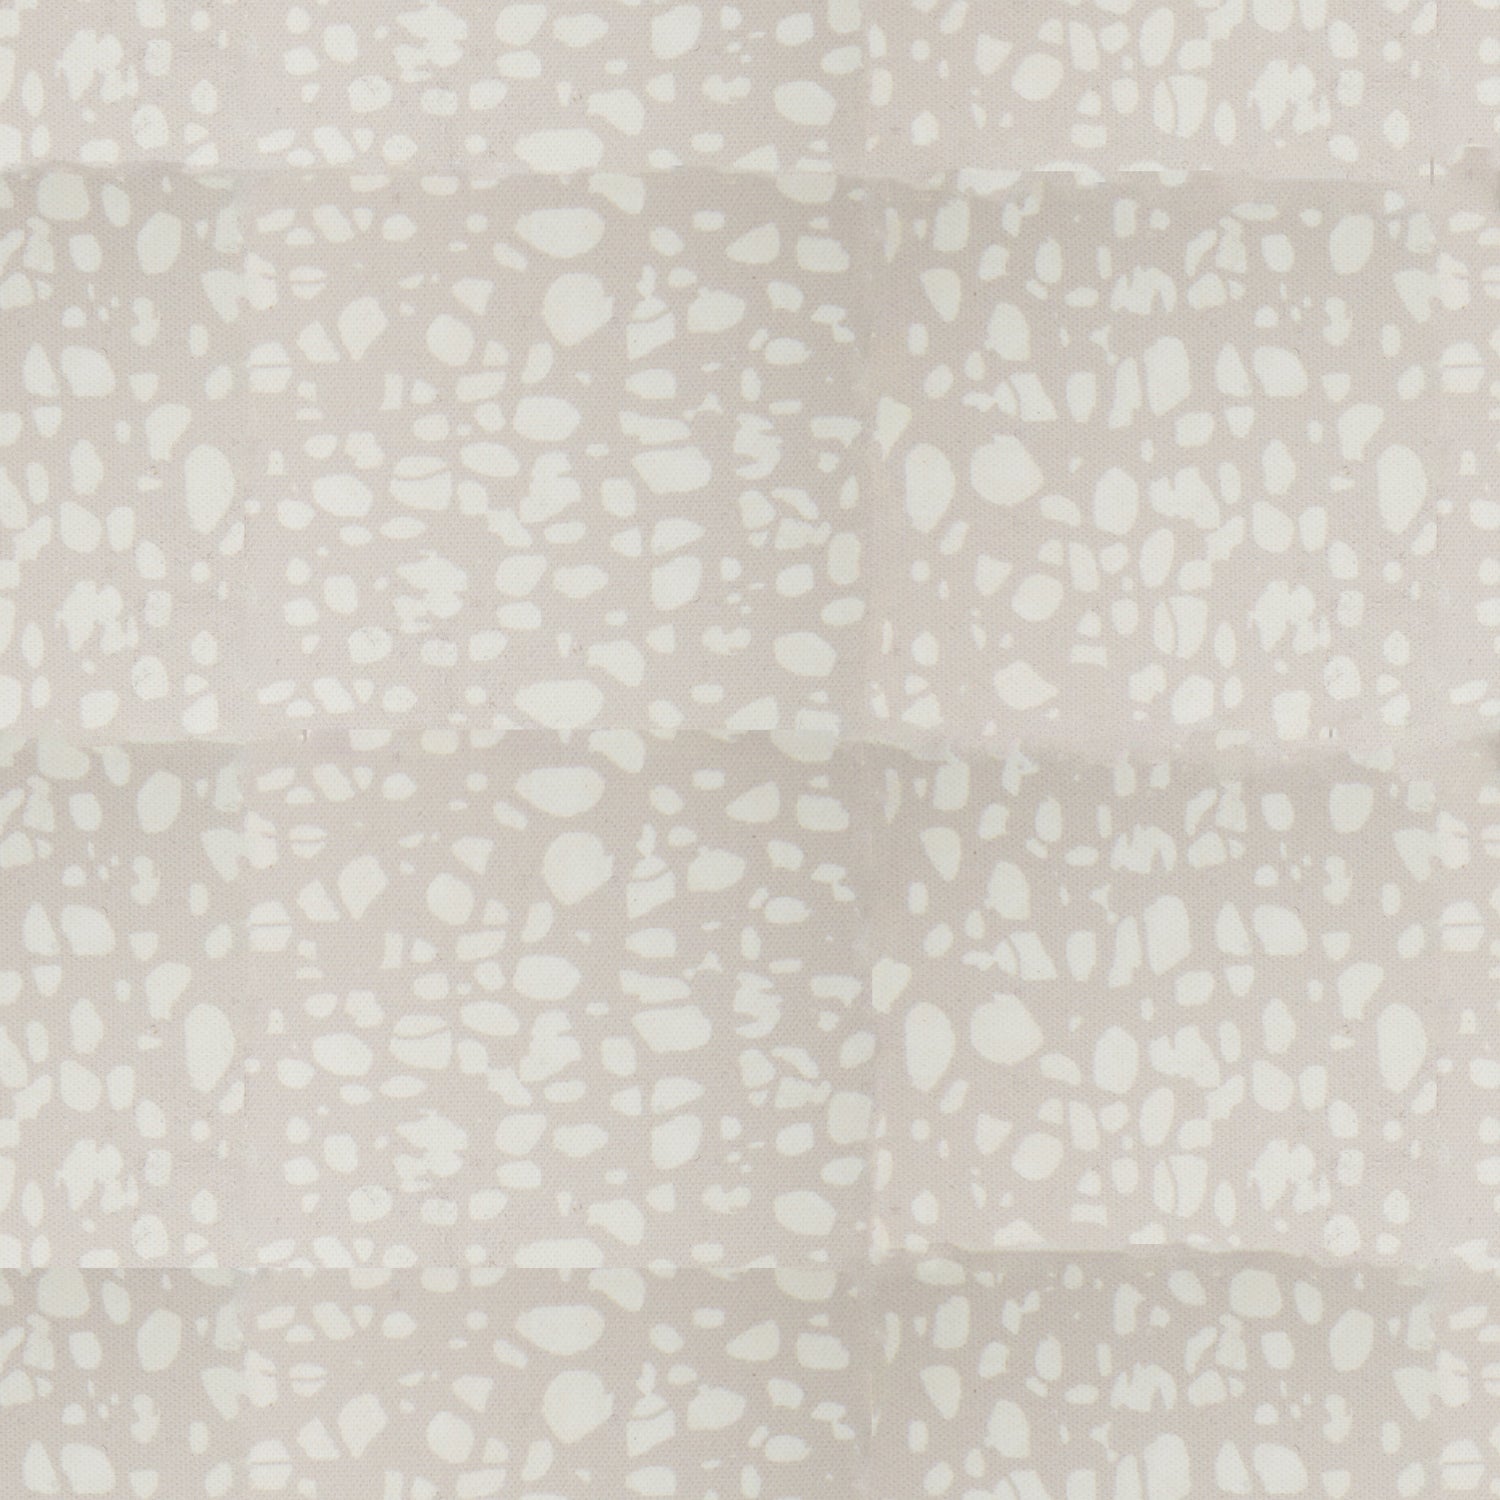 Detail of fabric in a batik splatter print in cream on a light gray field.